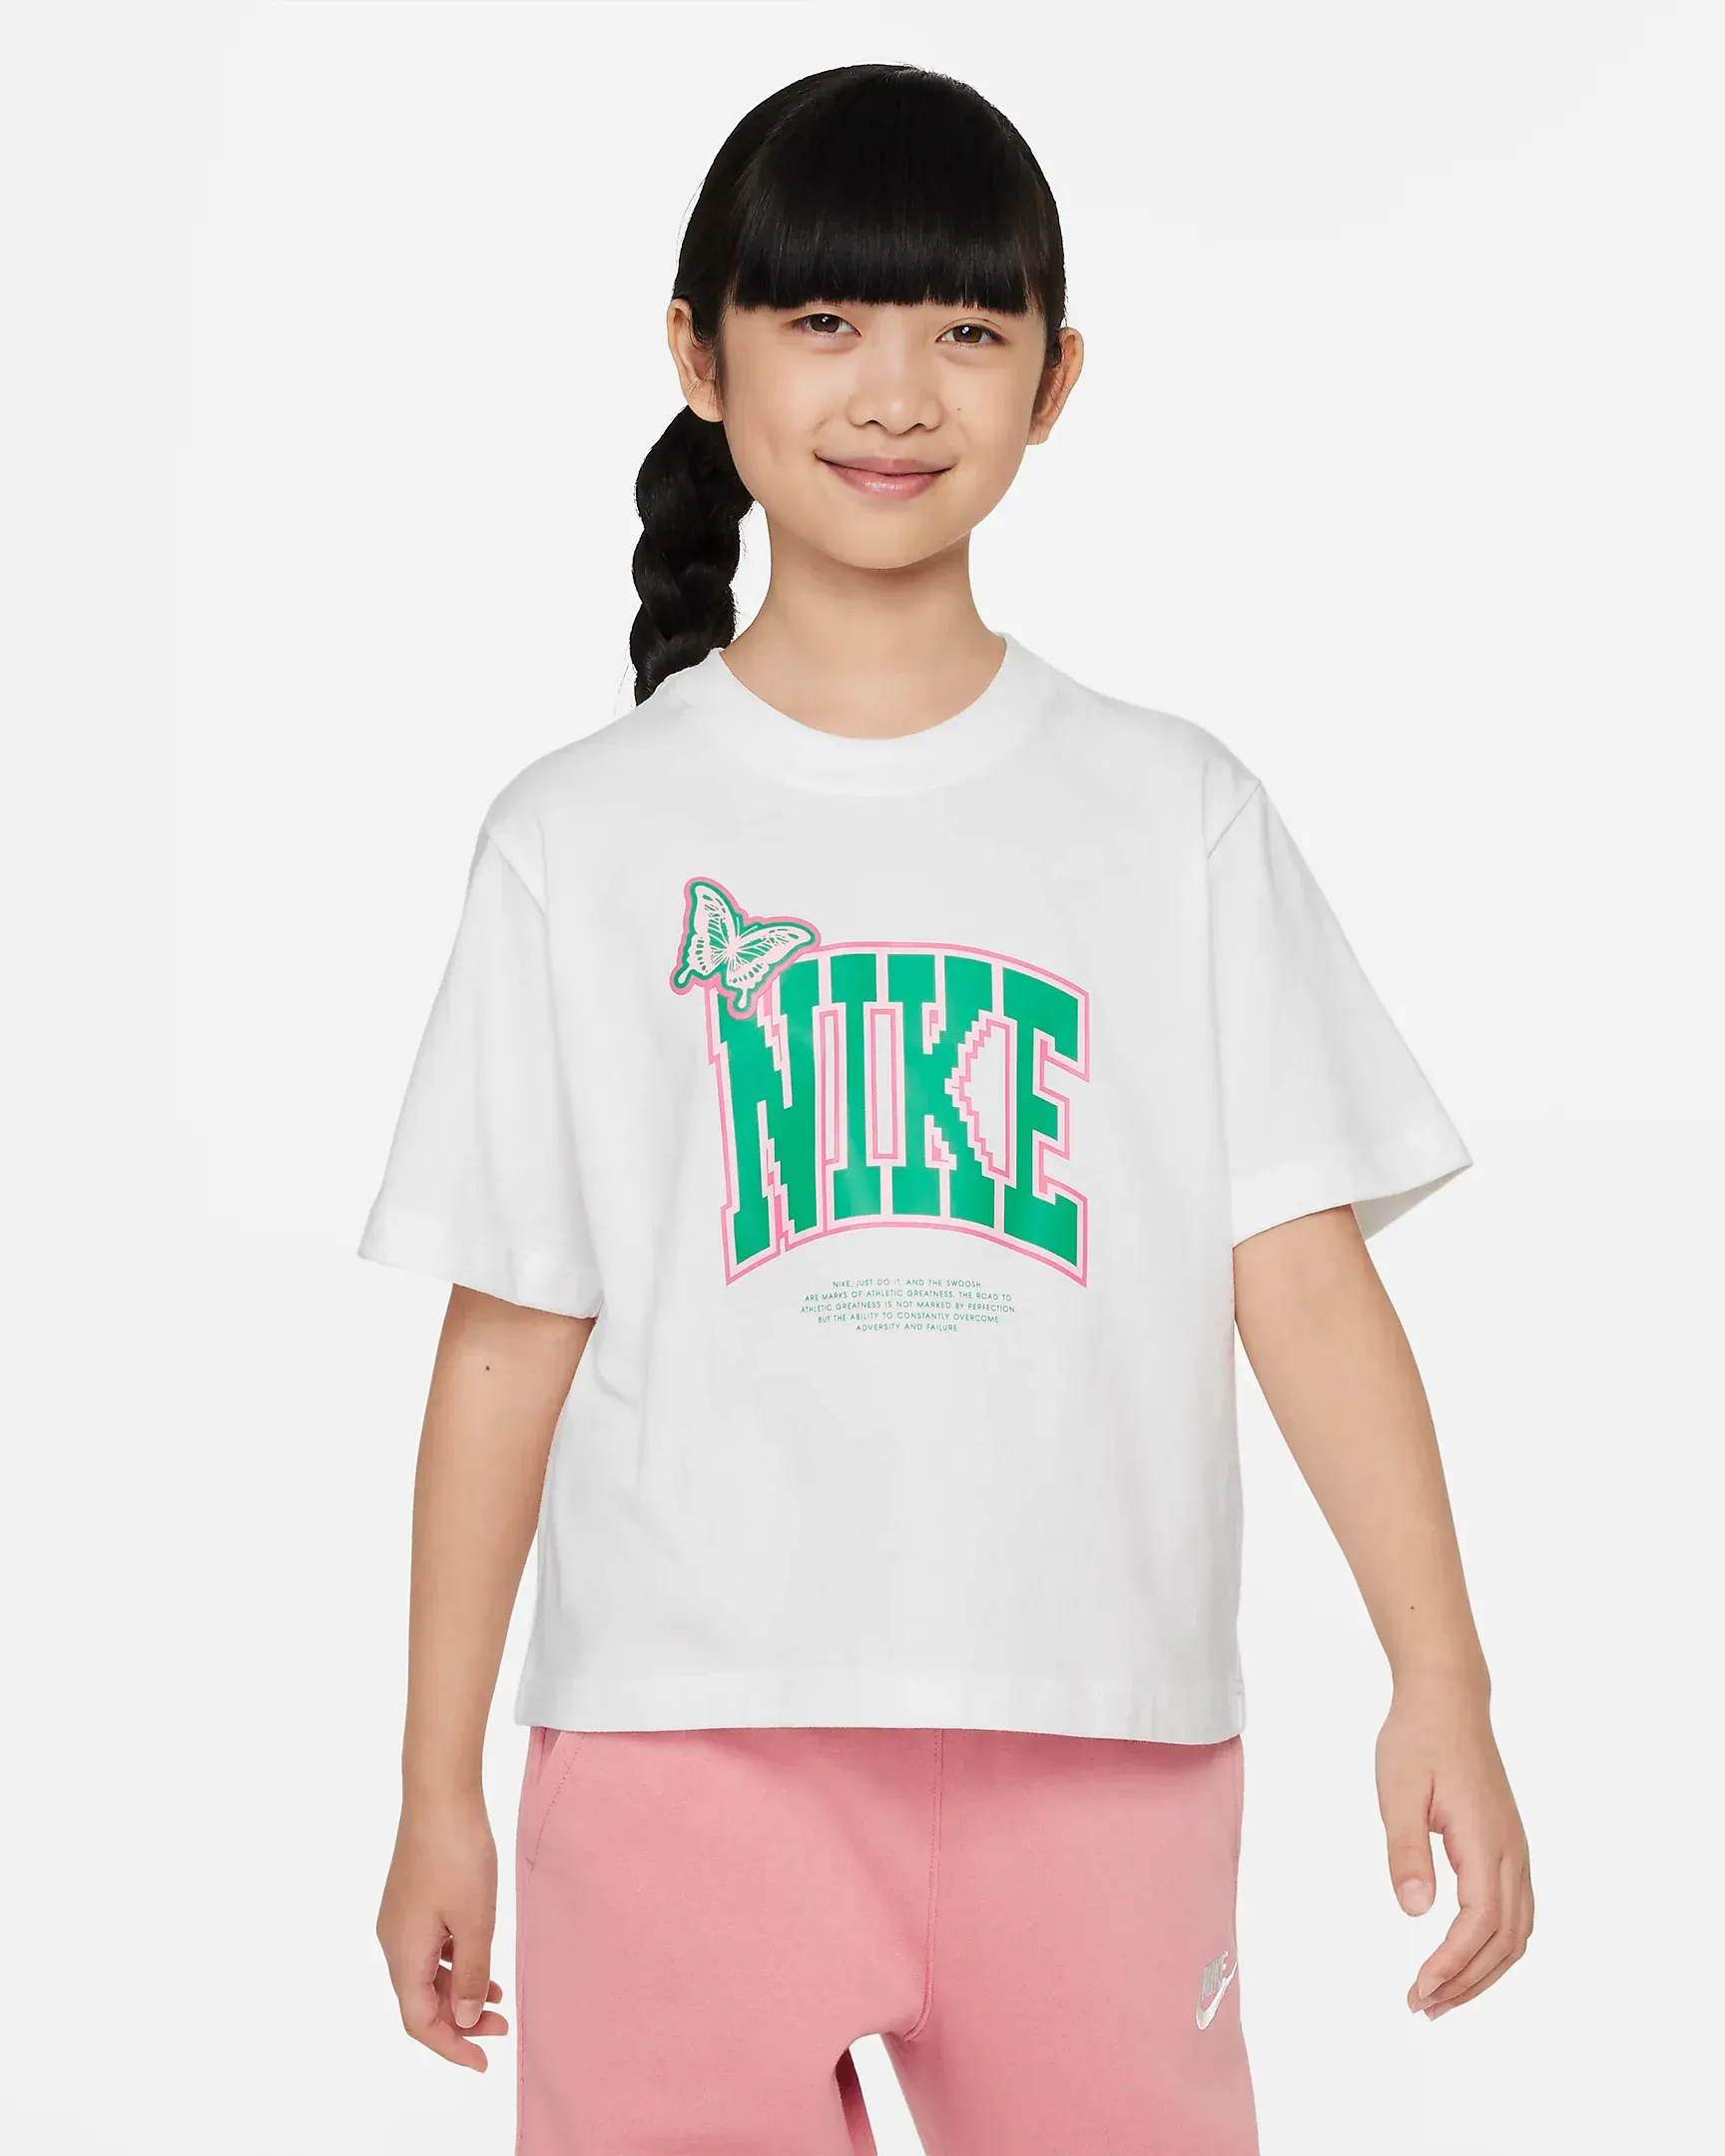 Foto Nike ropa deportiva
Camiseta para niña grande